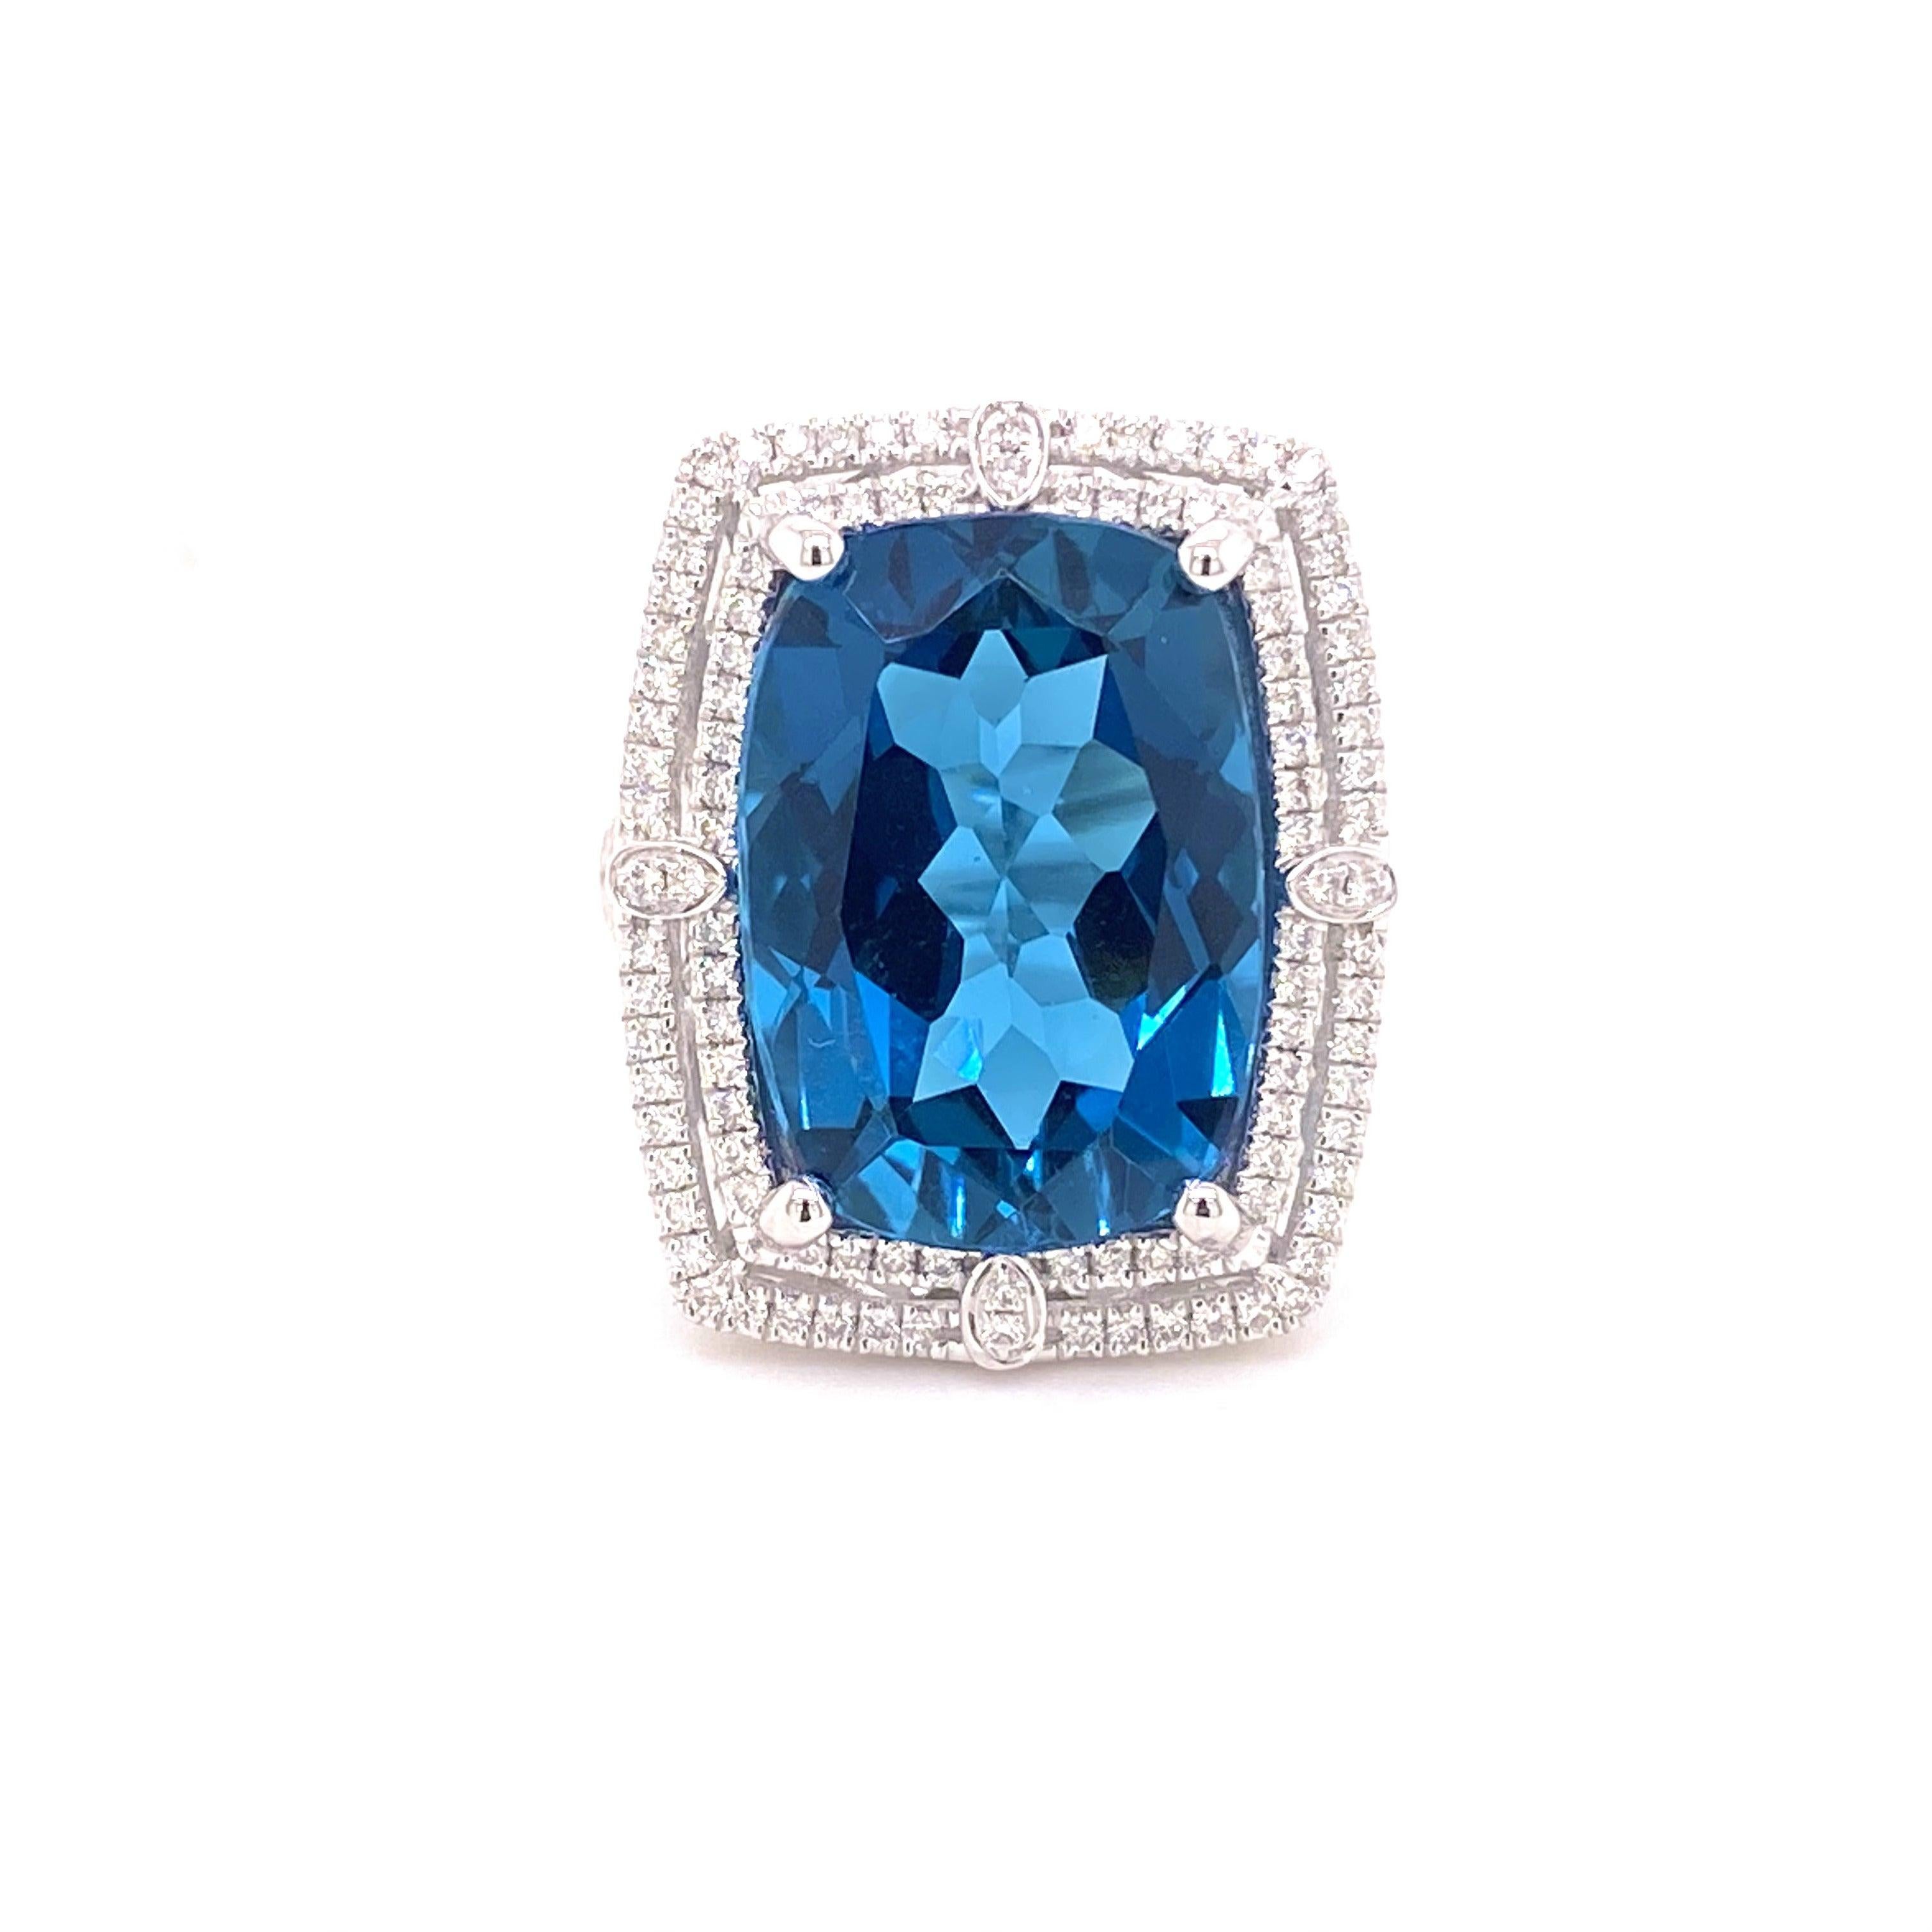 Rare Blue Topaz Ring, 16.11 Carat London Blue Topaz, .66 Carat Diamond, Cushion 3